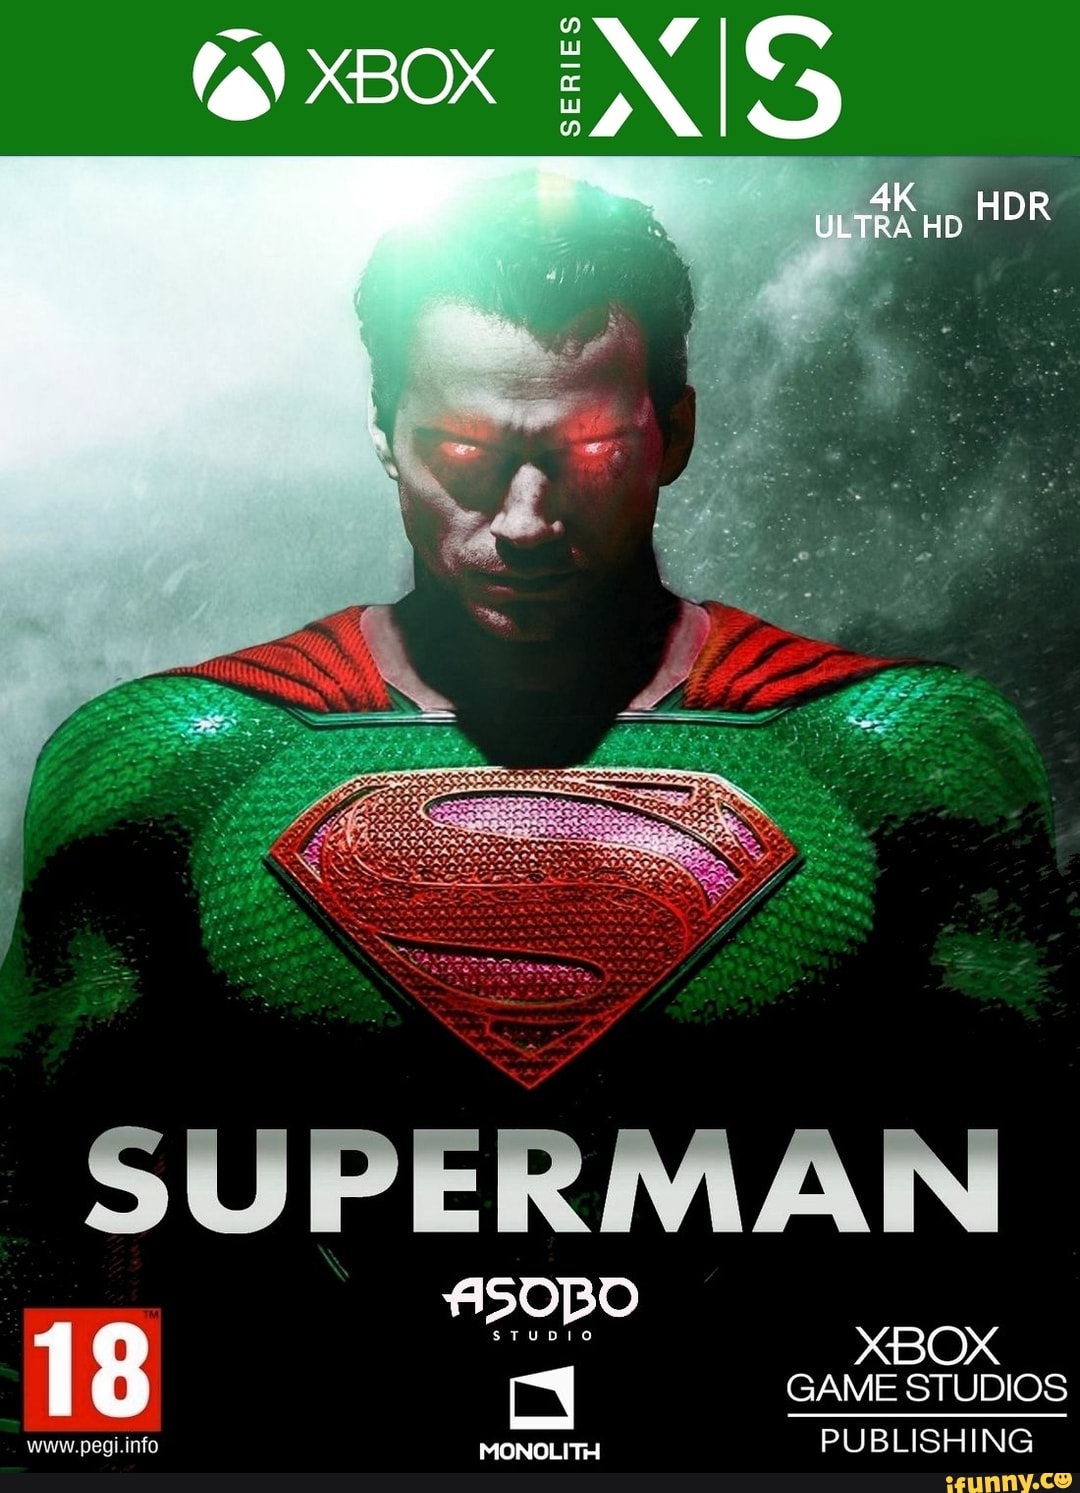 Superman videogame - XBOX AK SUPERMAN XBOX GAME STUDIOS PUBLISHING